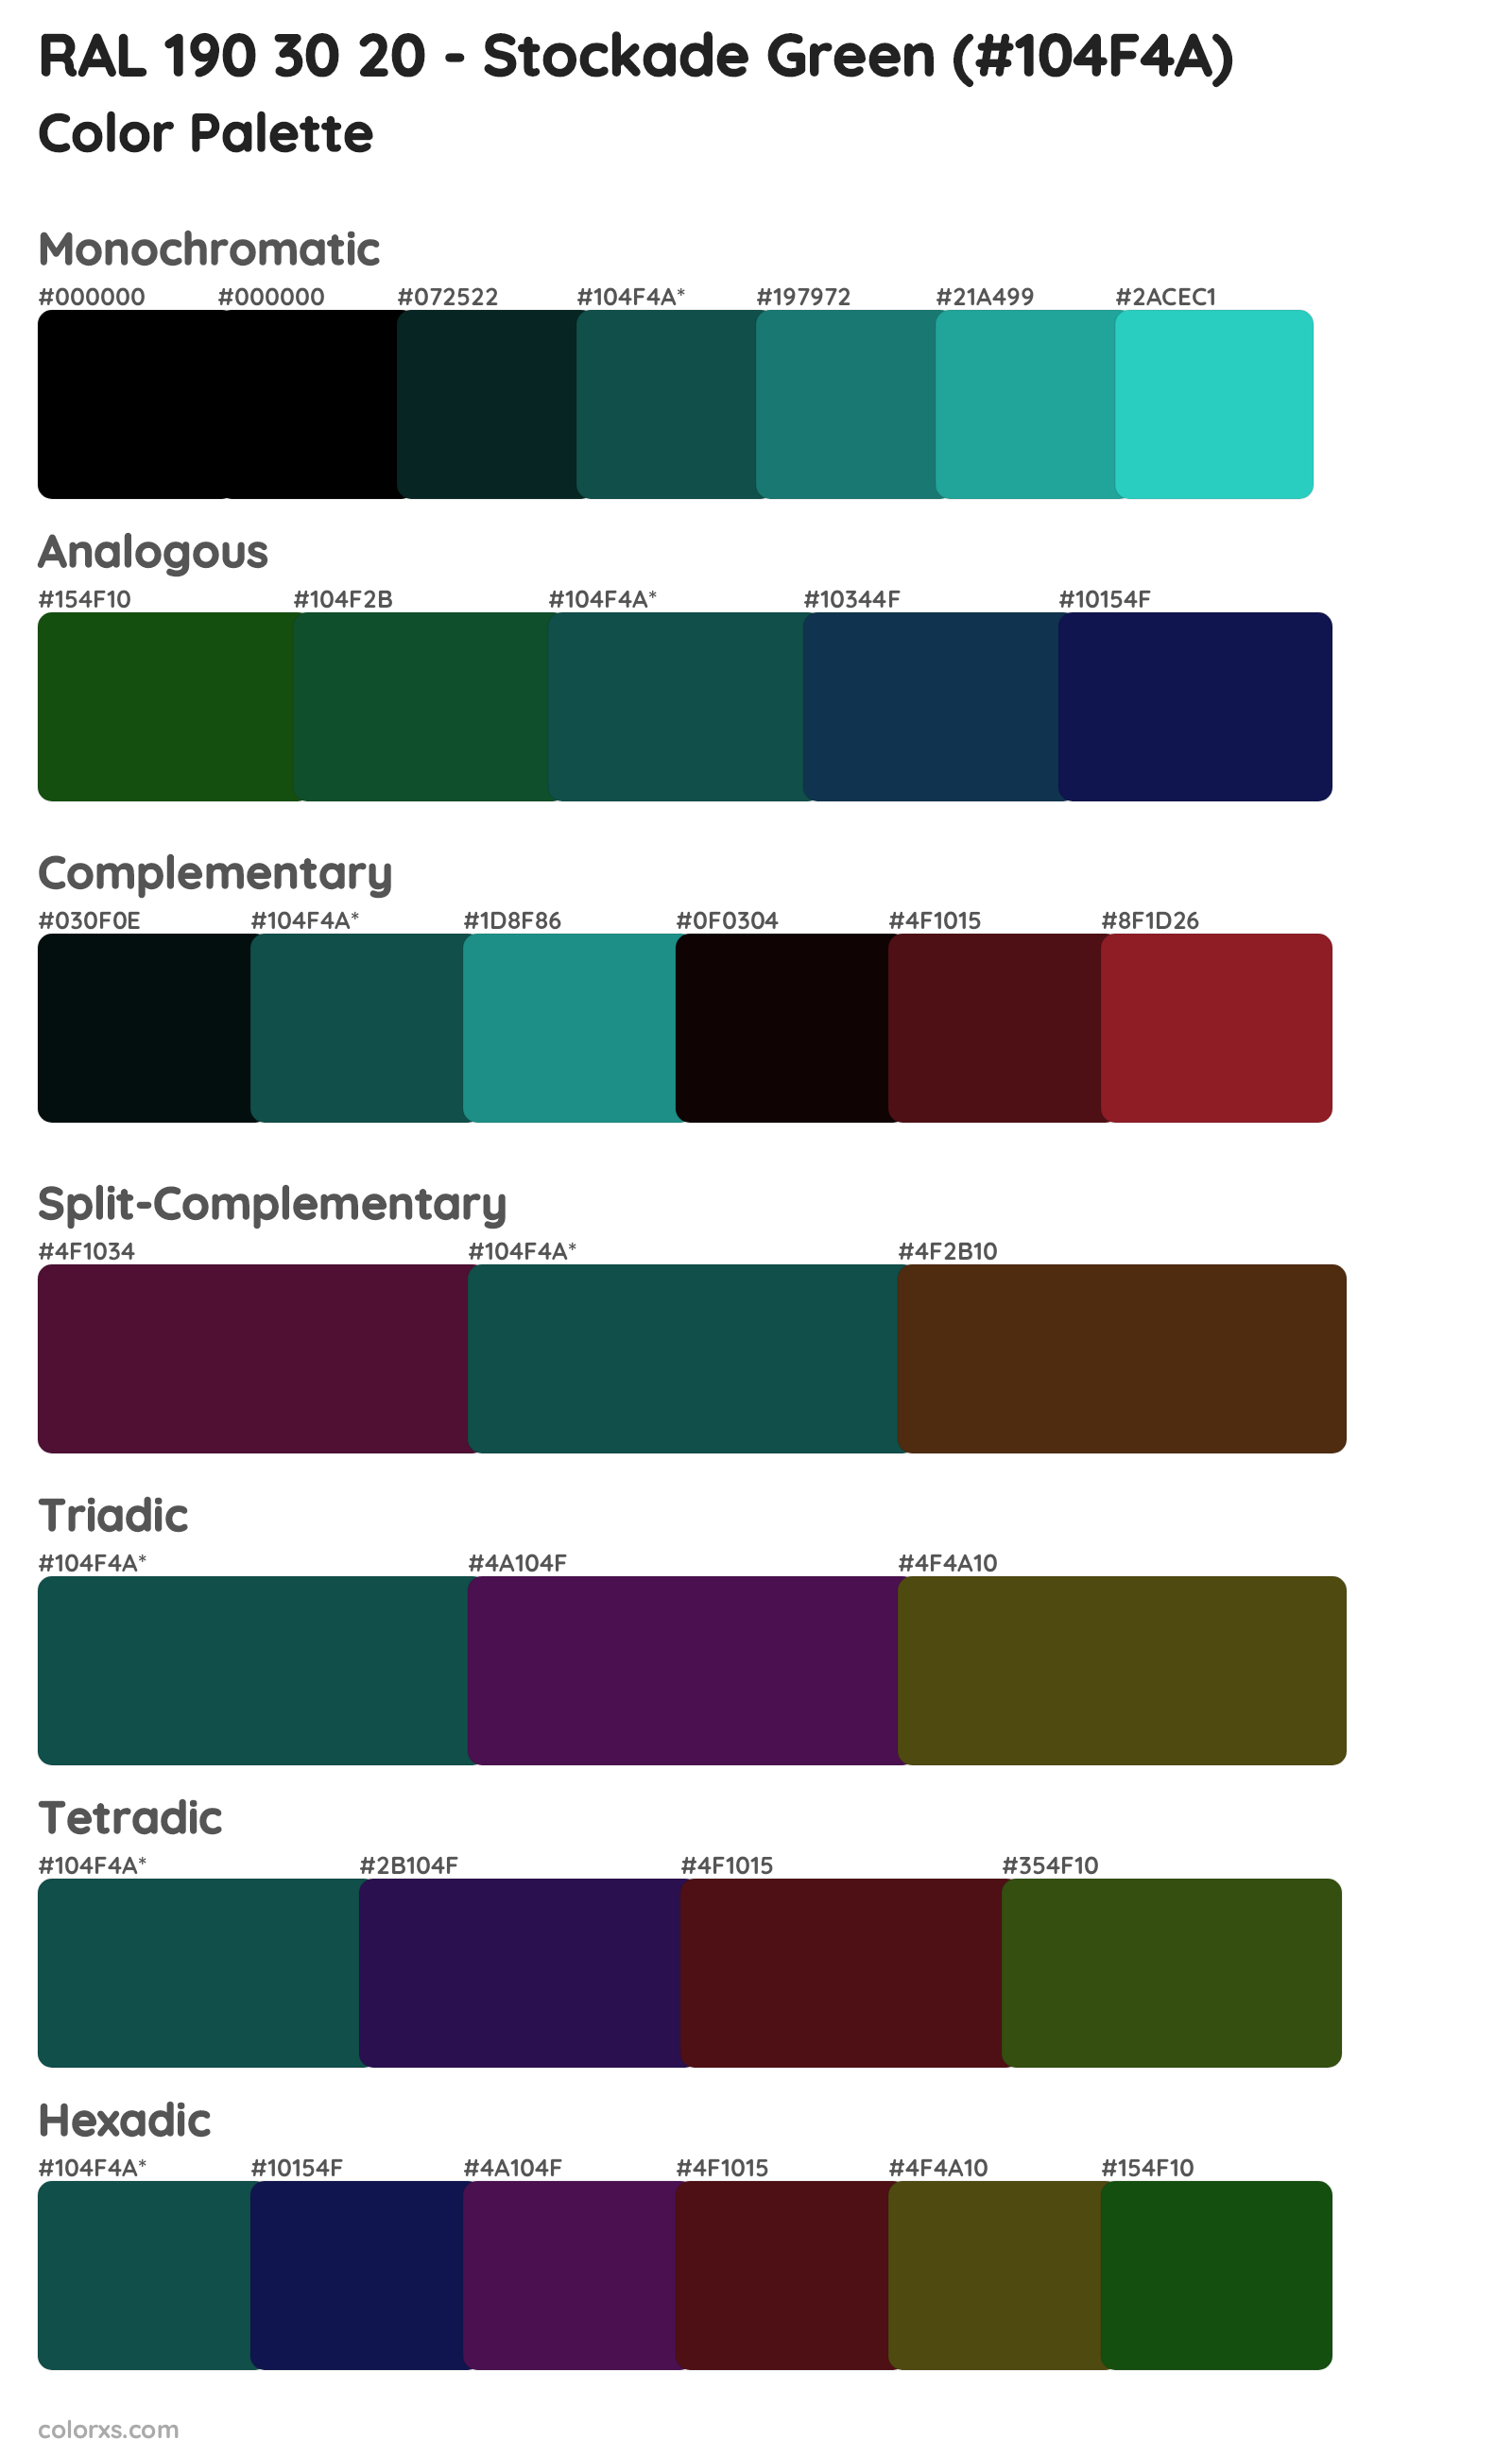 RAL 190 30 20 - Stockade Green Color Scheme Palettes